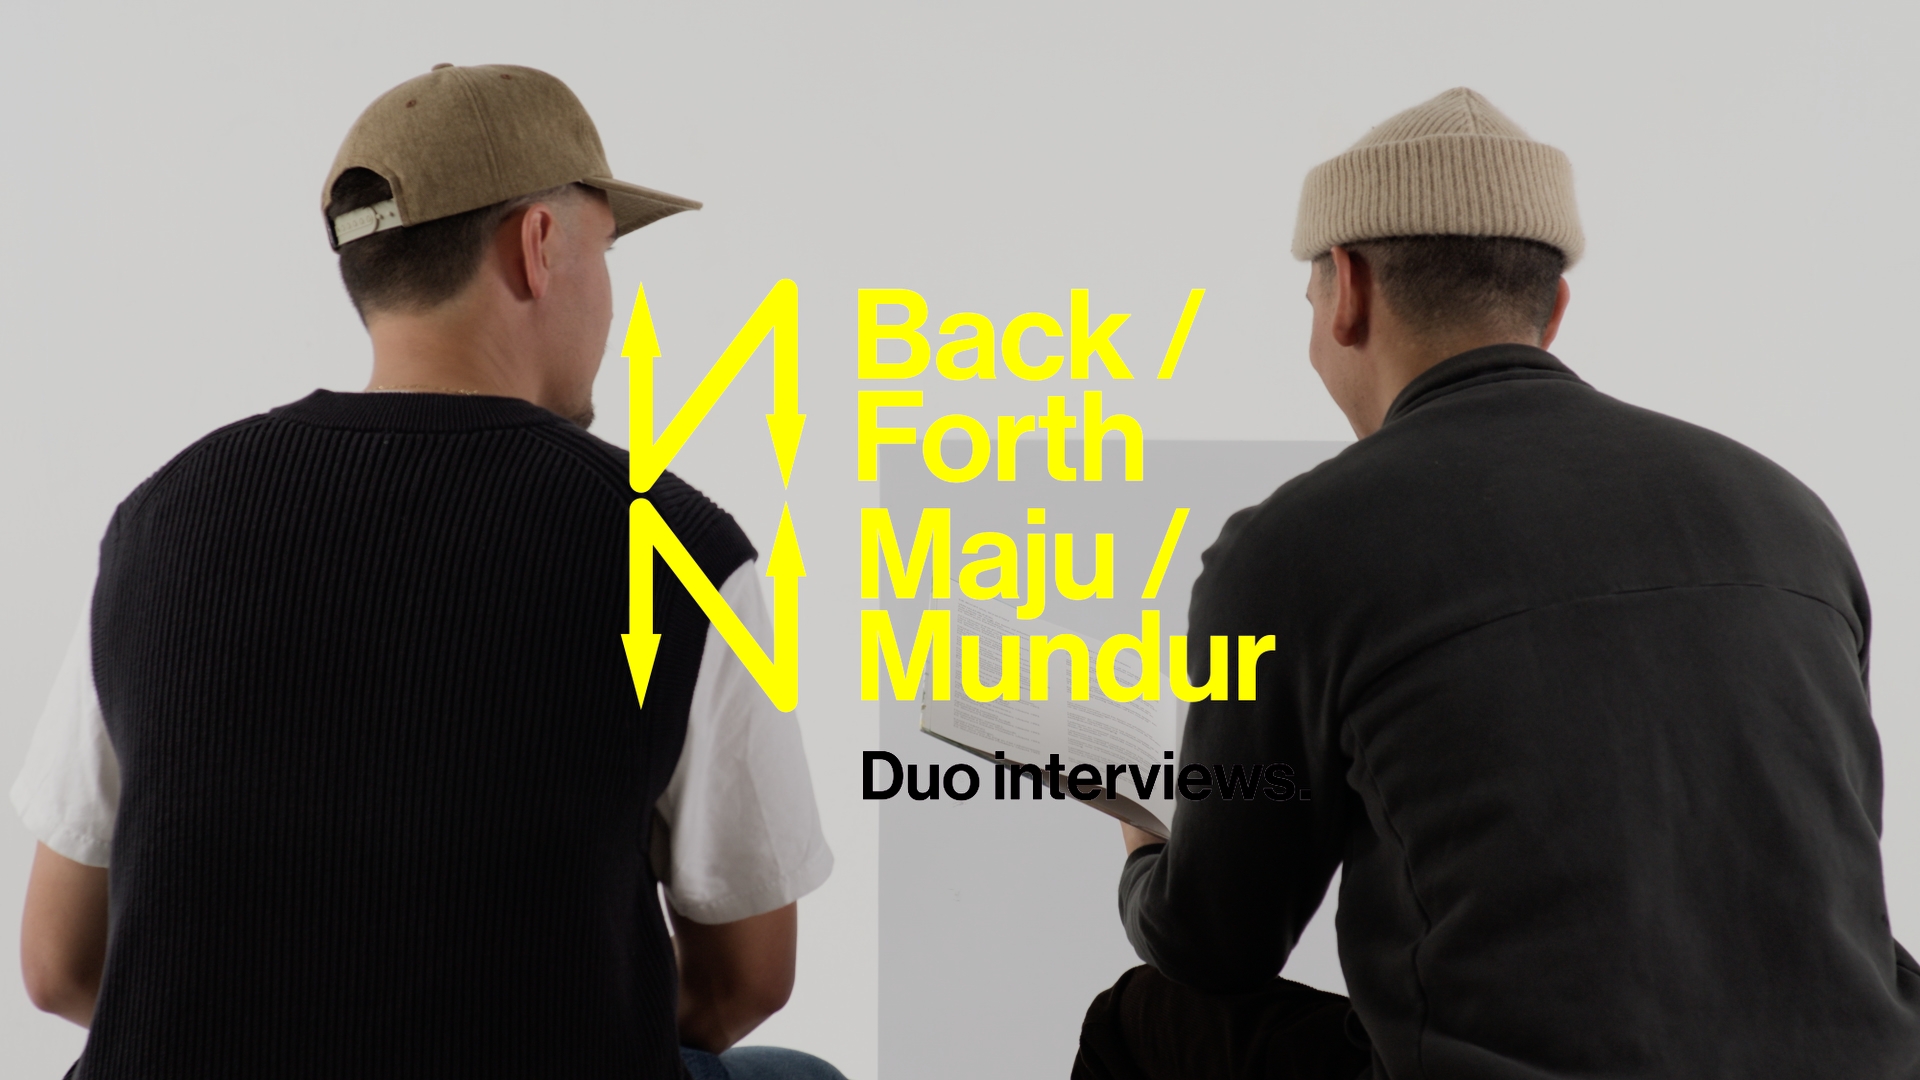 Maju Mundur, Duo Interviews, serie 2, Museum Maluku